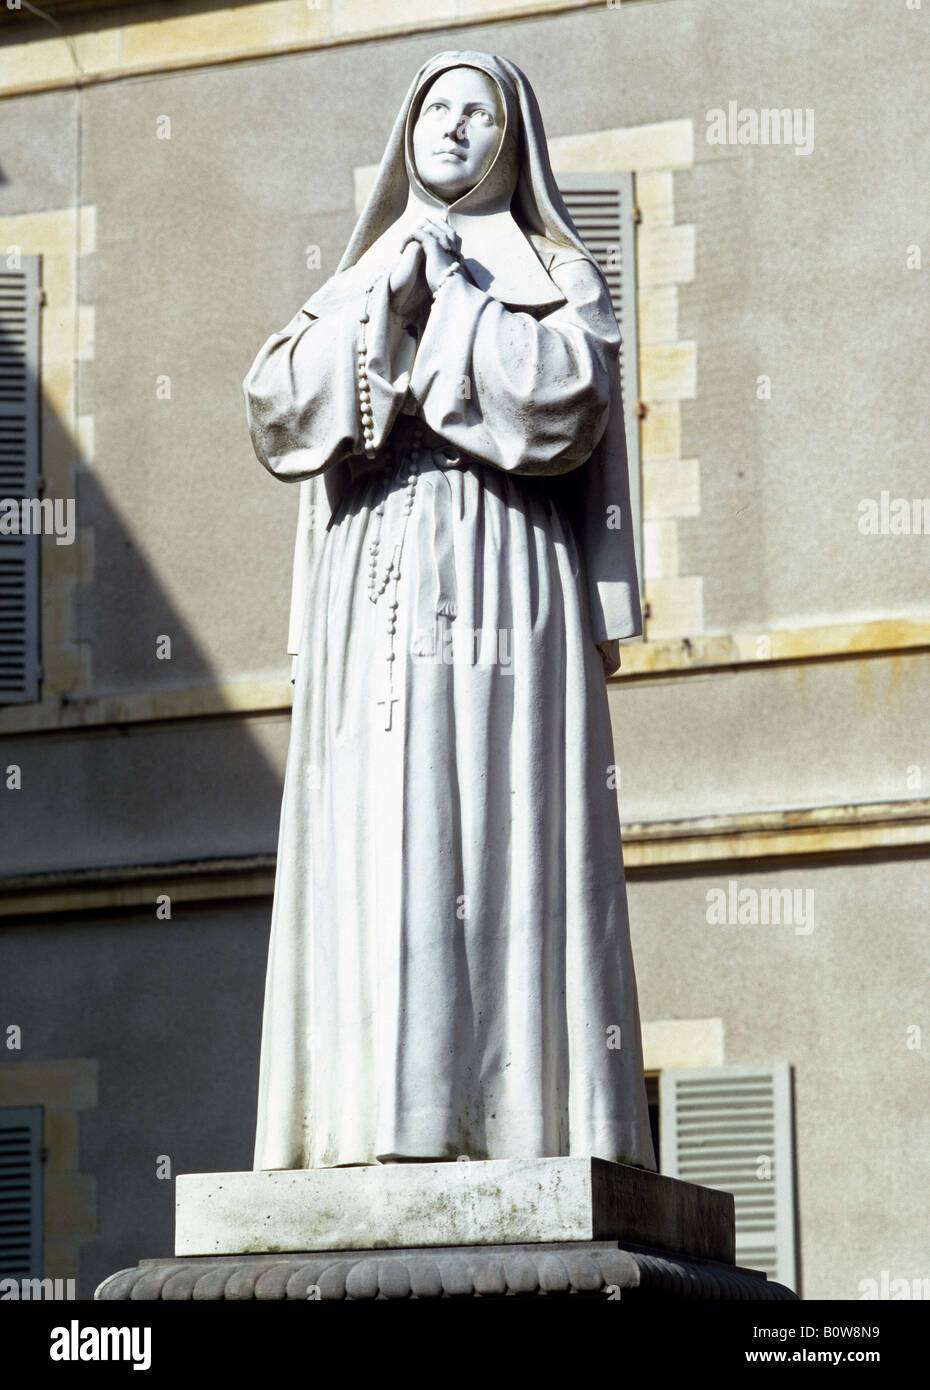 Statue of St. Bernadette of Lourdes in the St. Gildard monastery garden, Nevers, Nievre Department, France, Europe Stock Photo